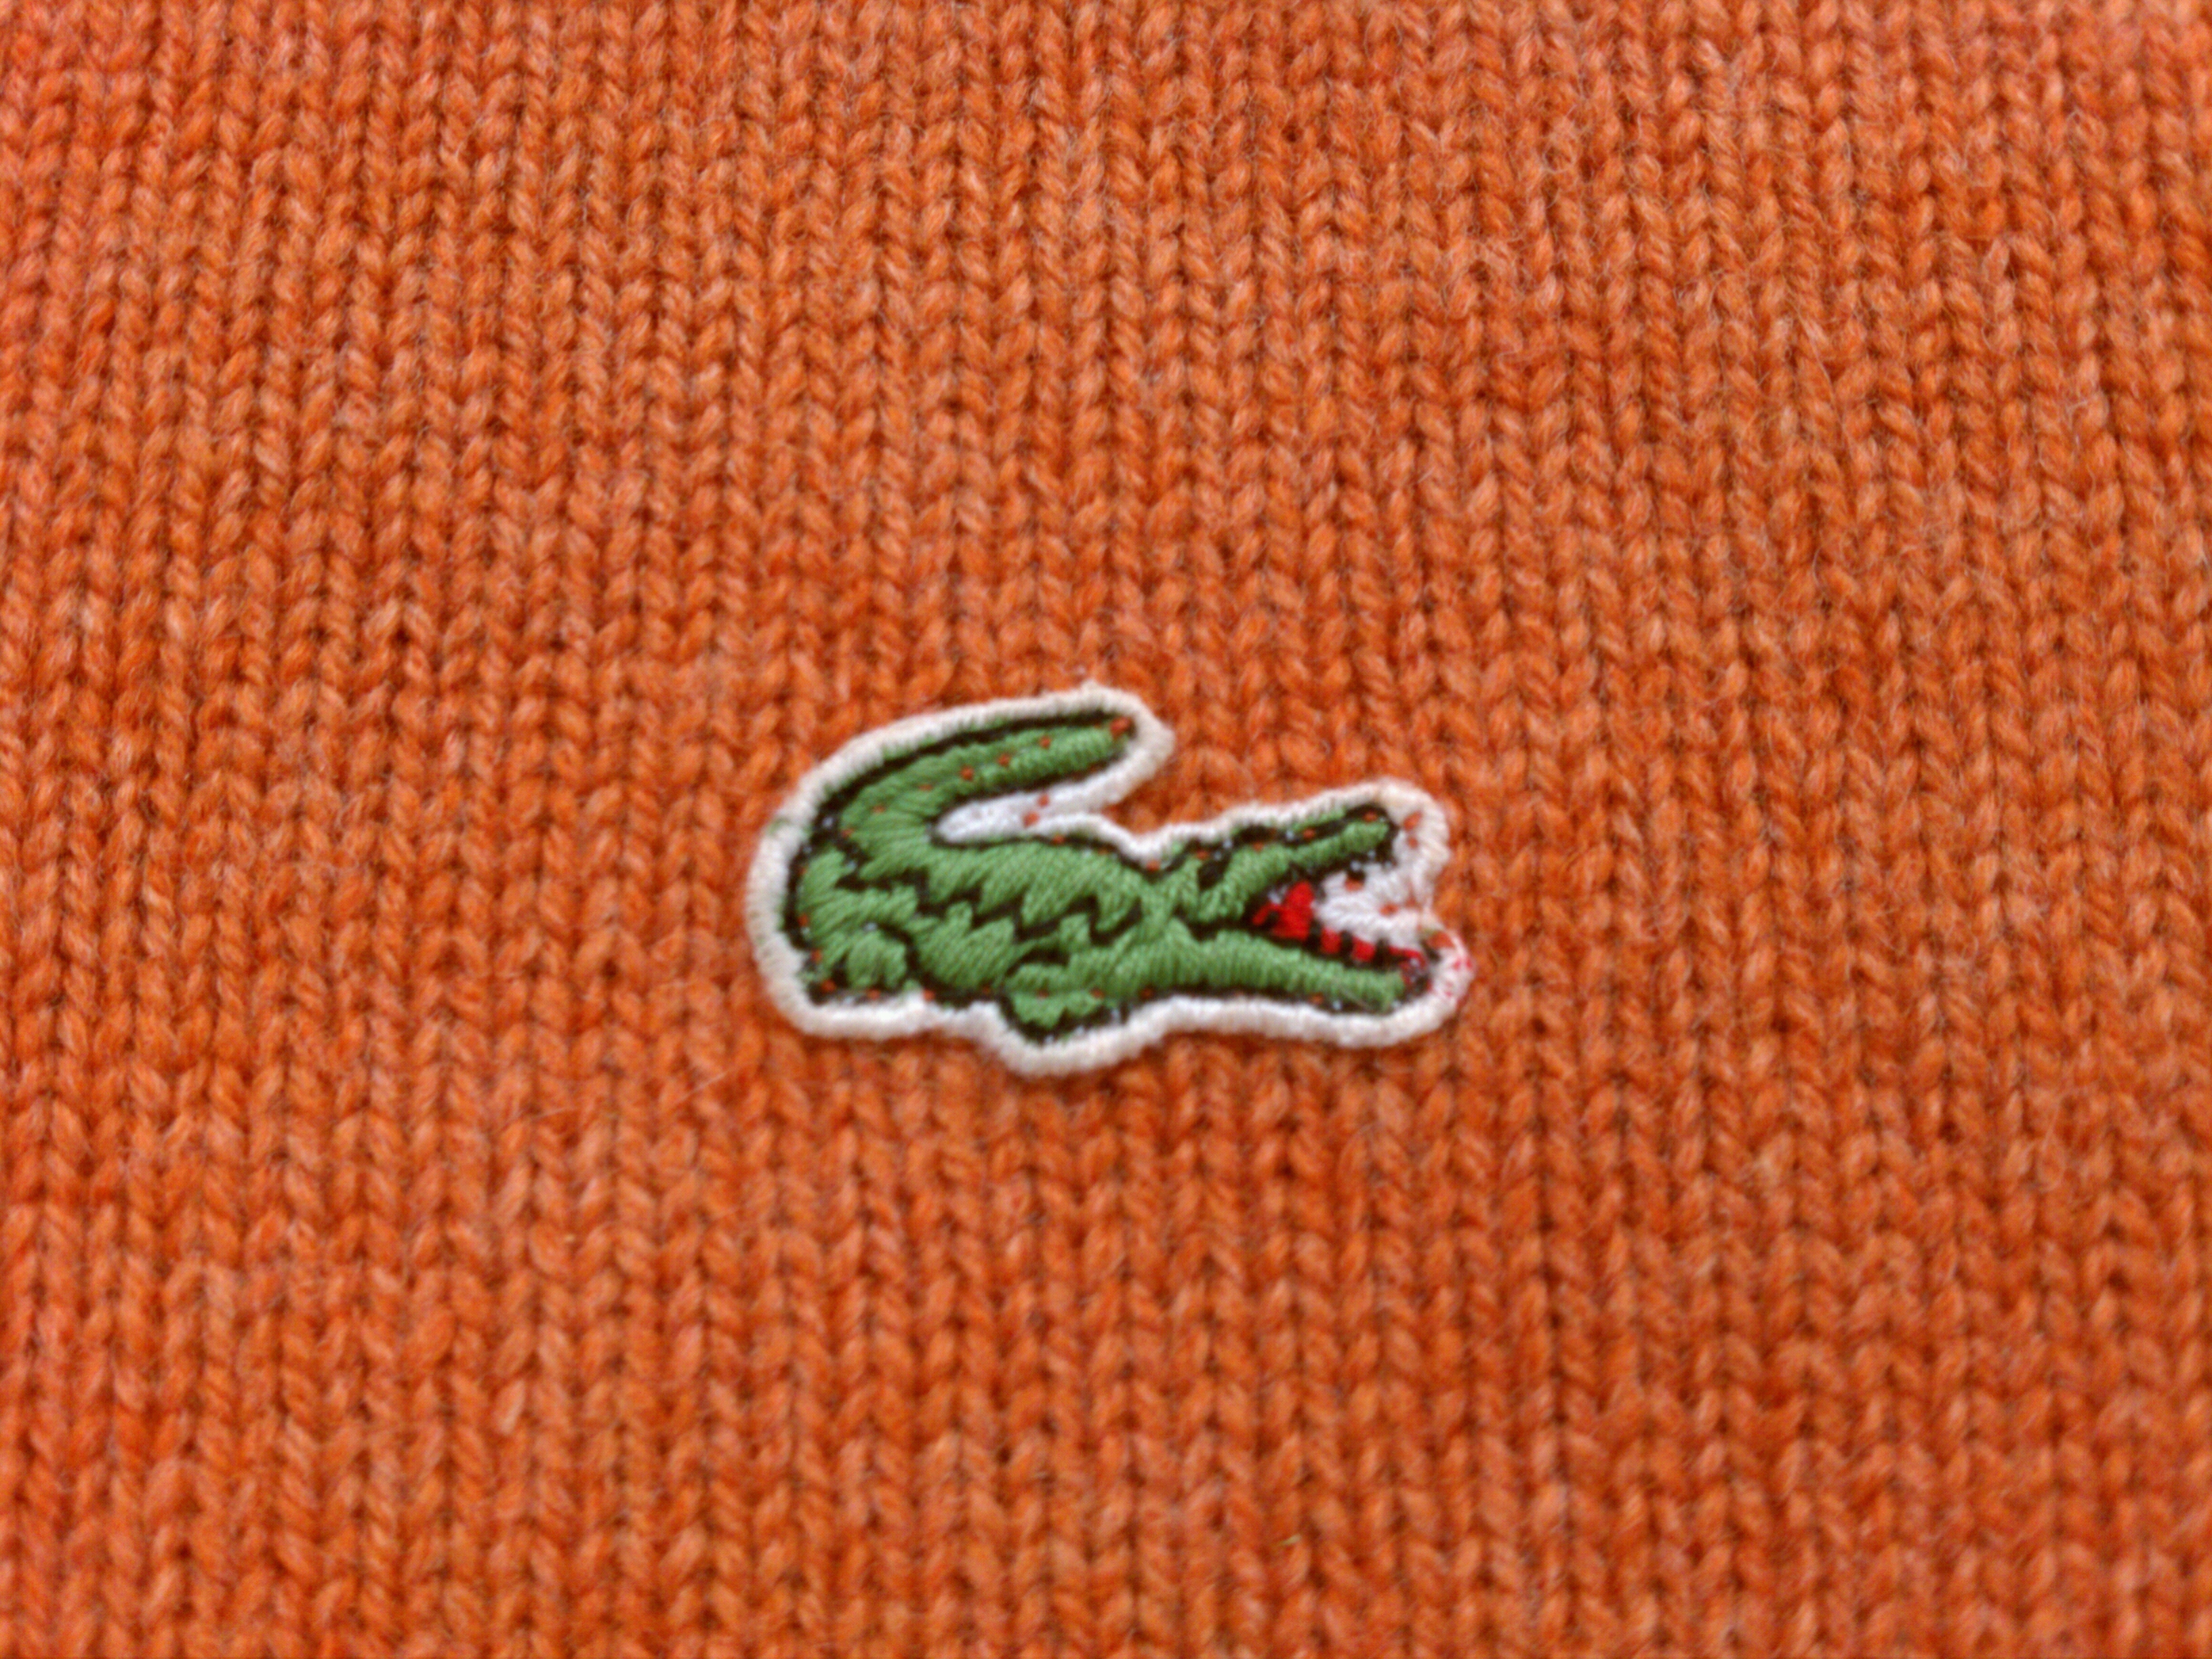 alligator symbol clothing